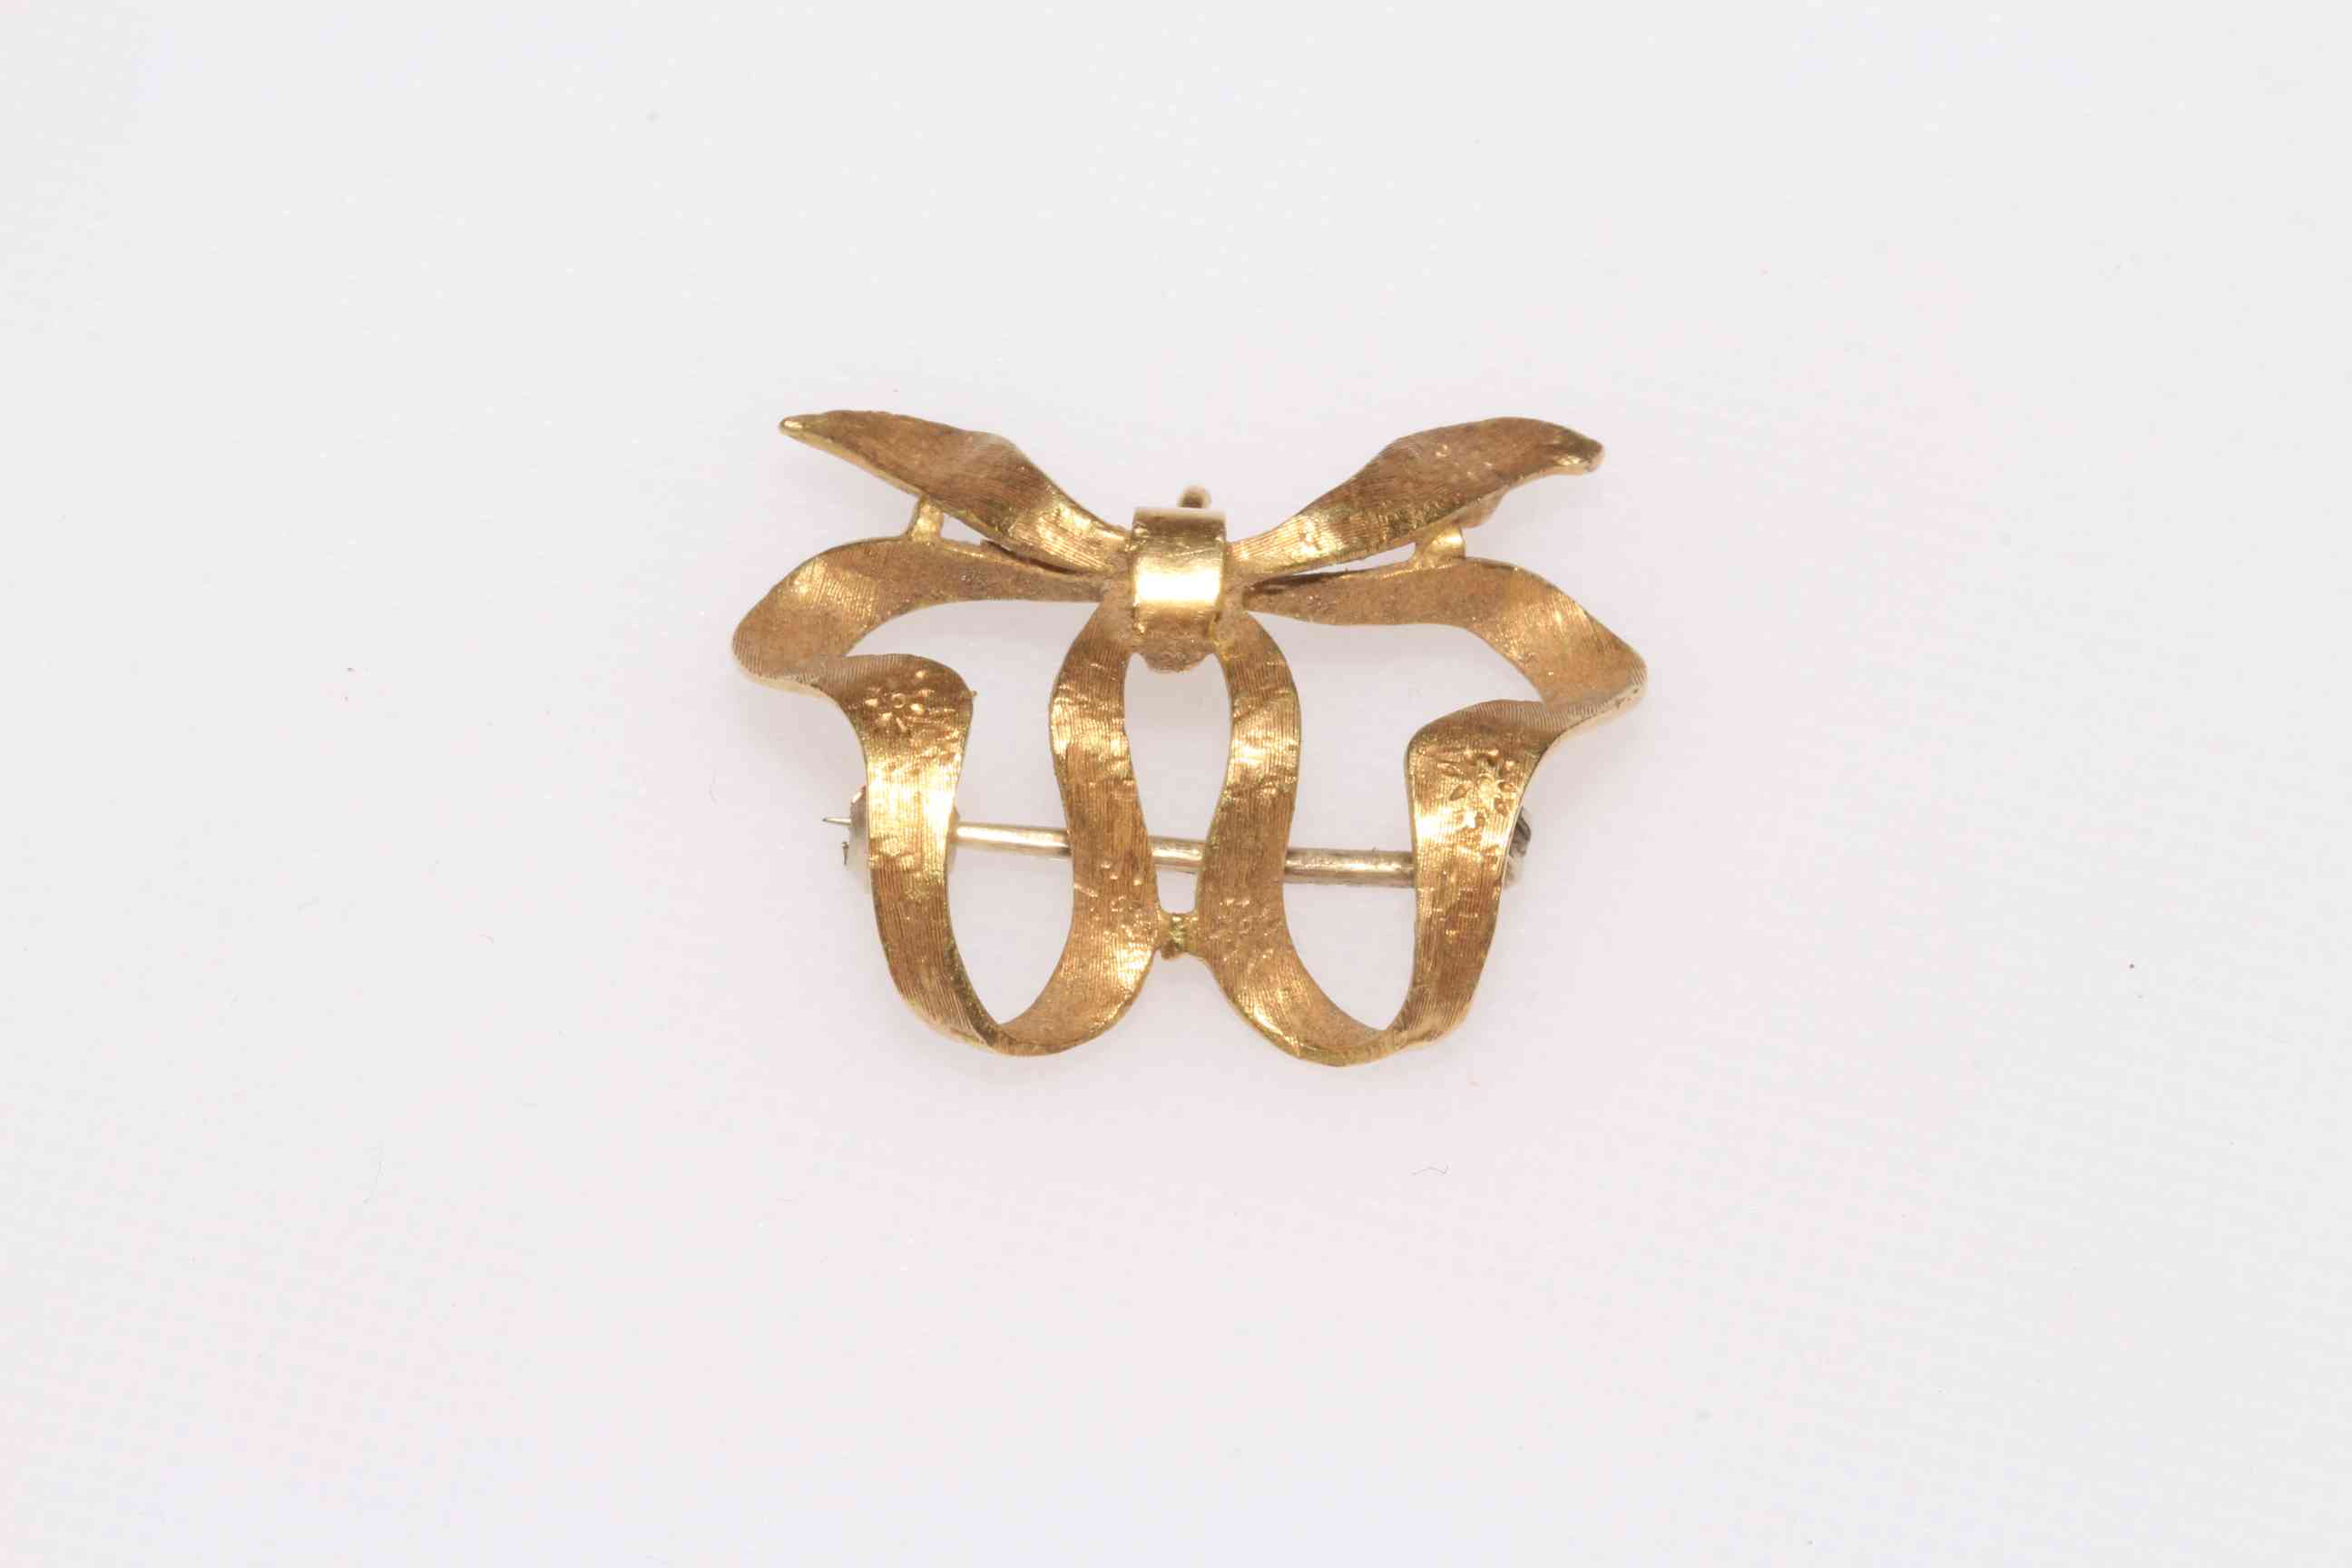 18 carat gold ribbon bow brooch, 3cm across.